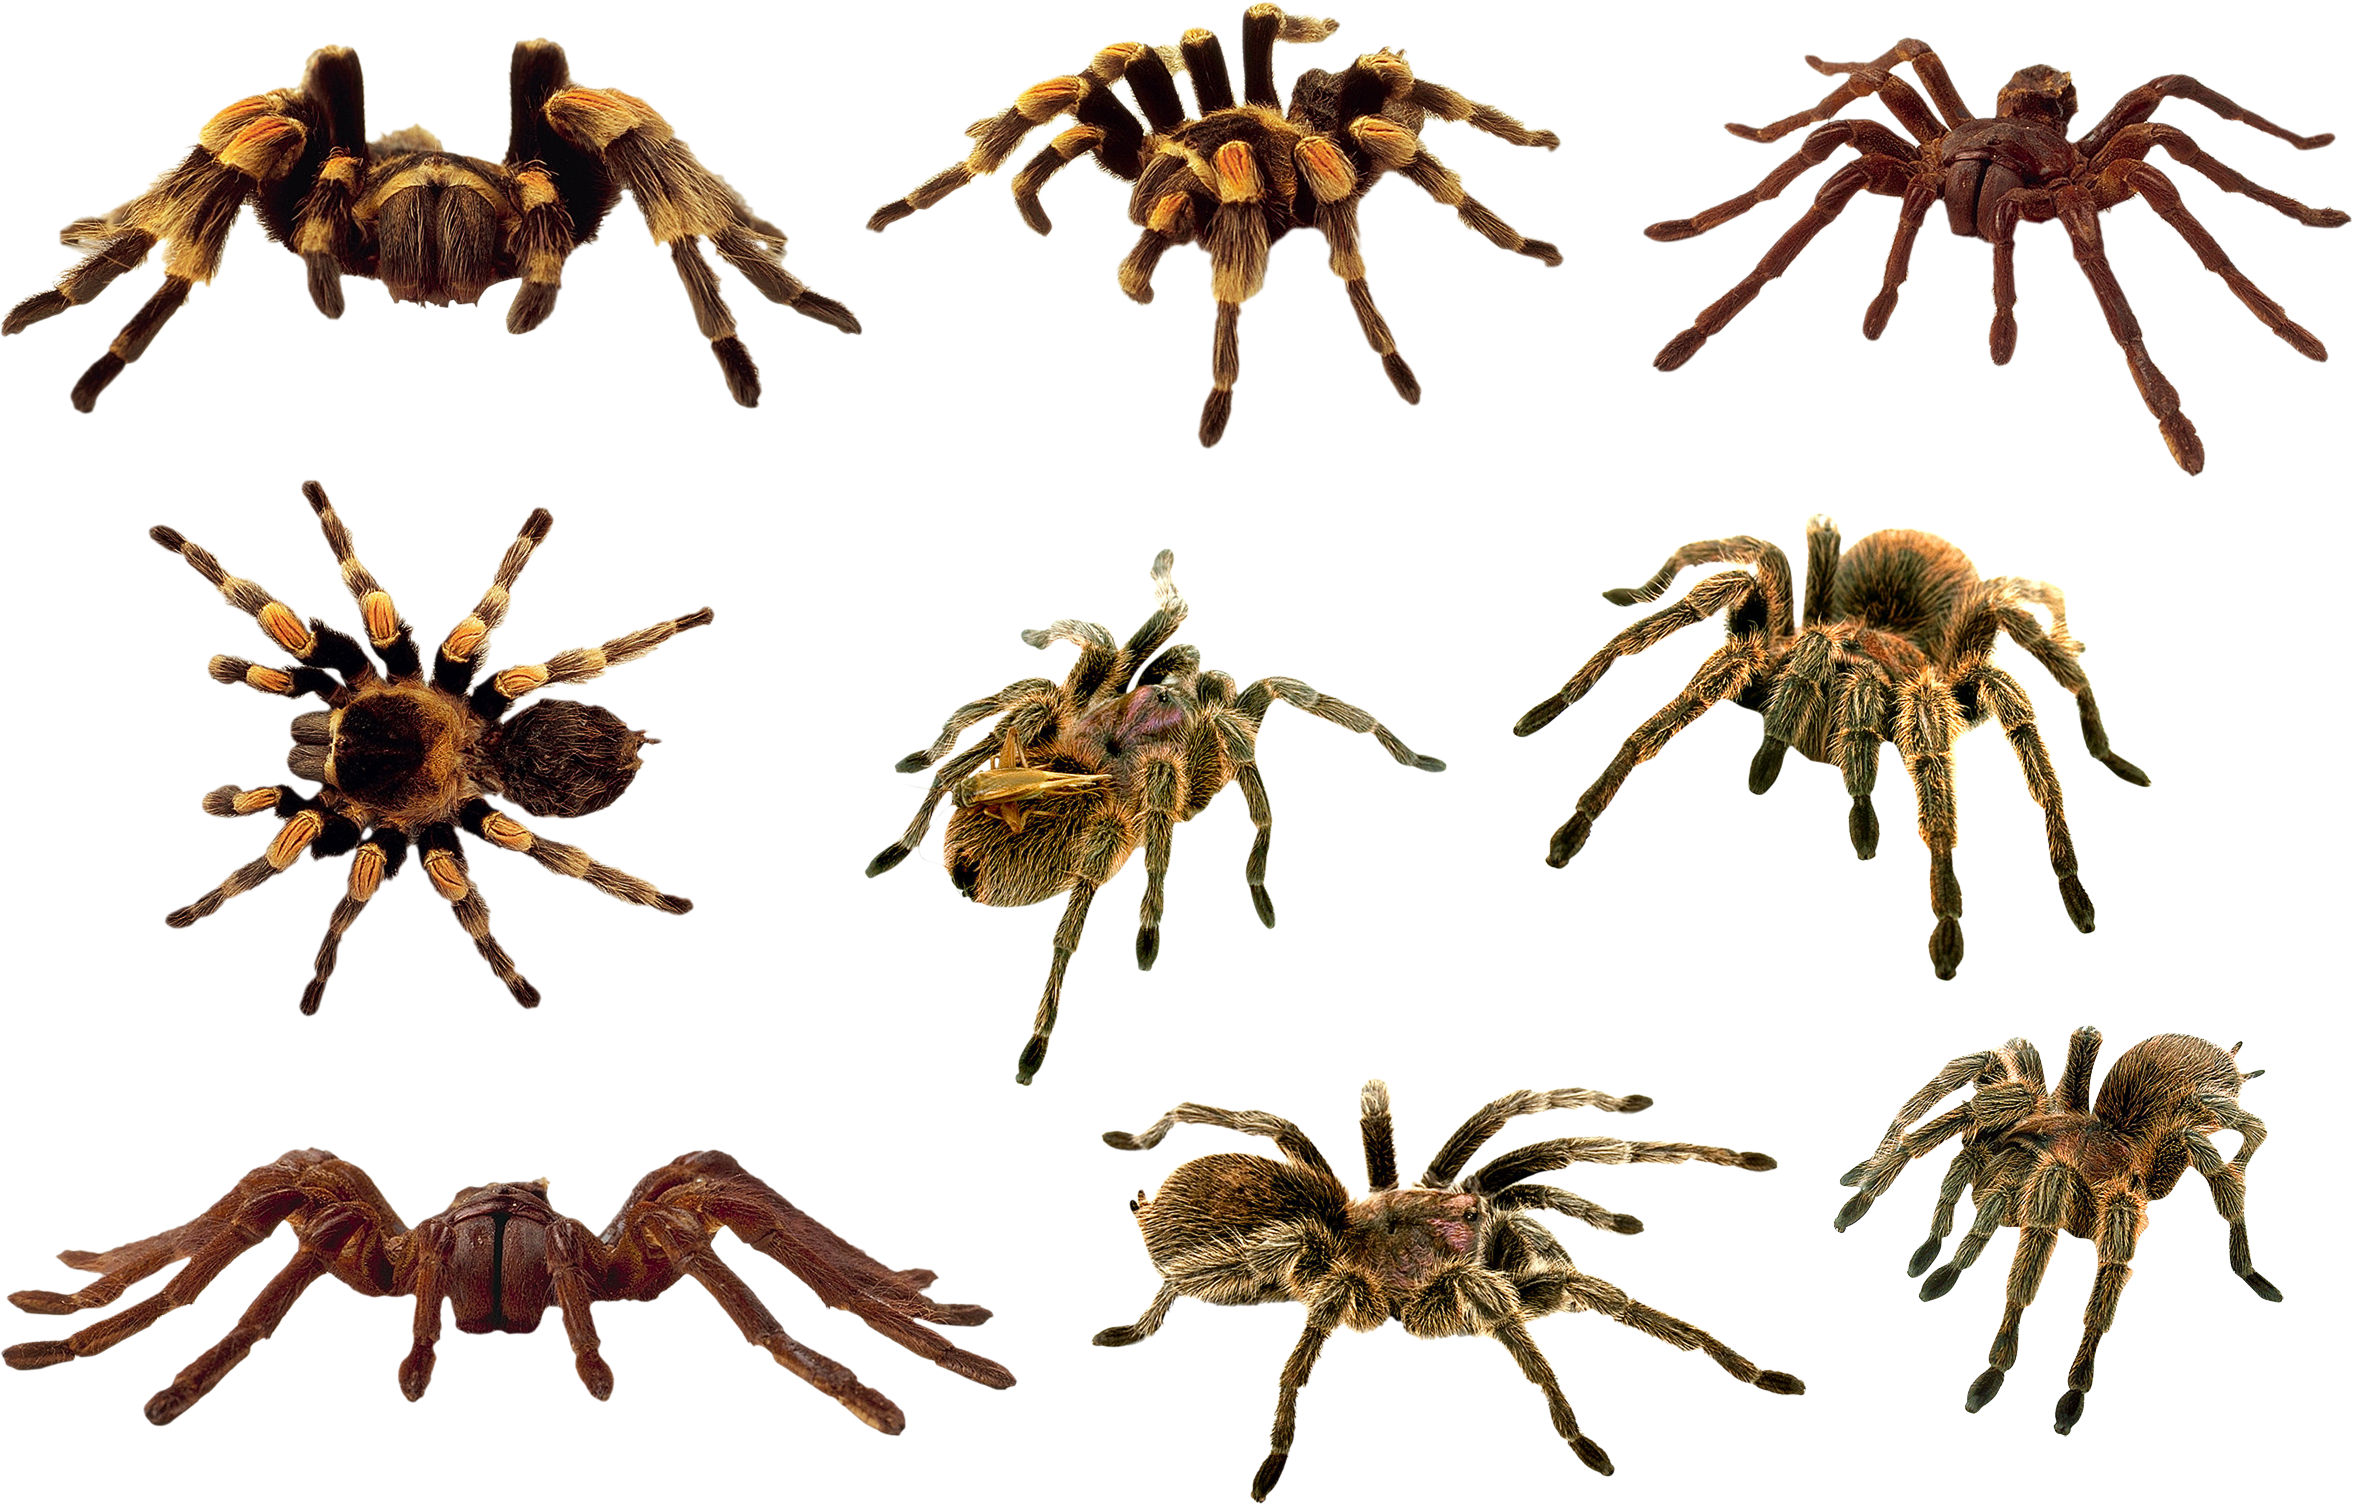 Spider Png Image PNG Image